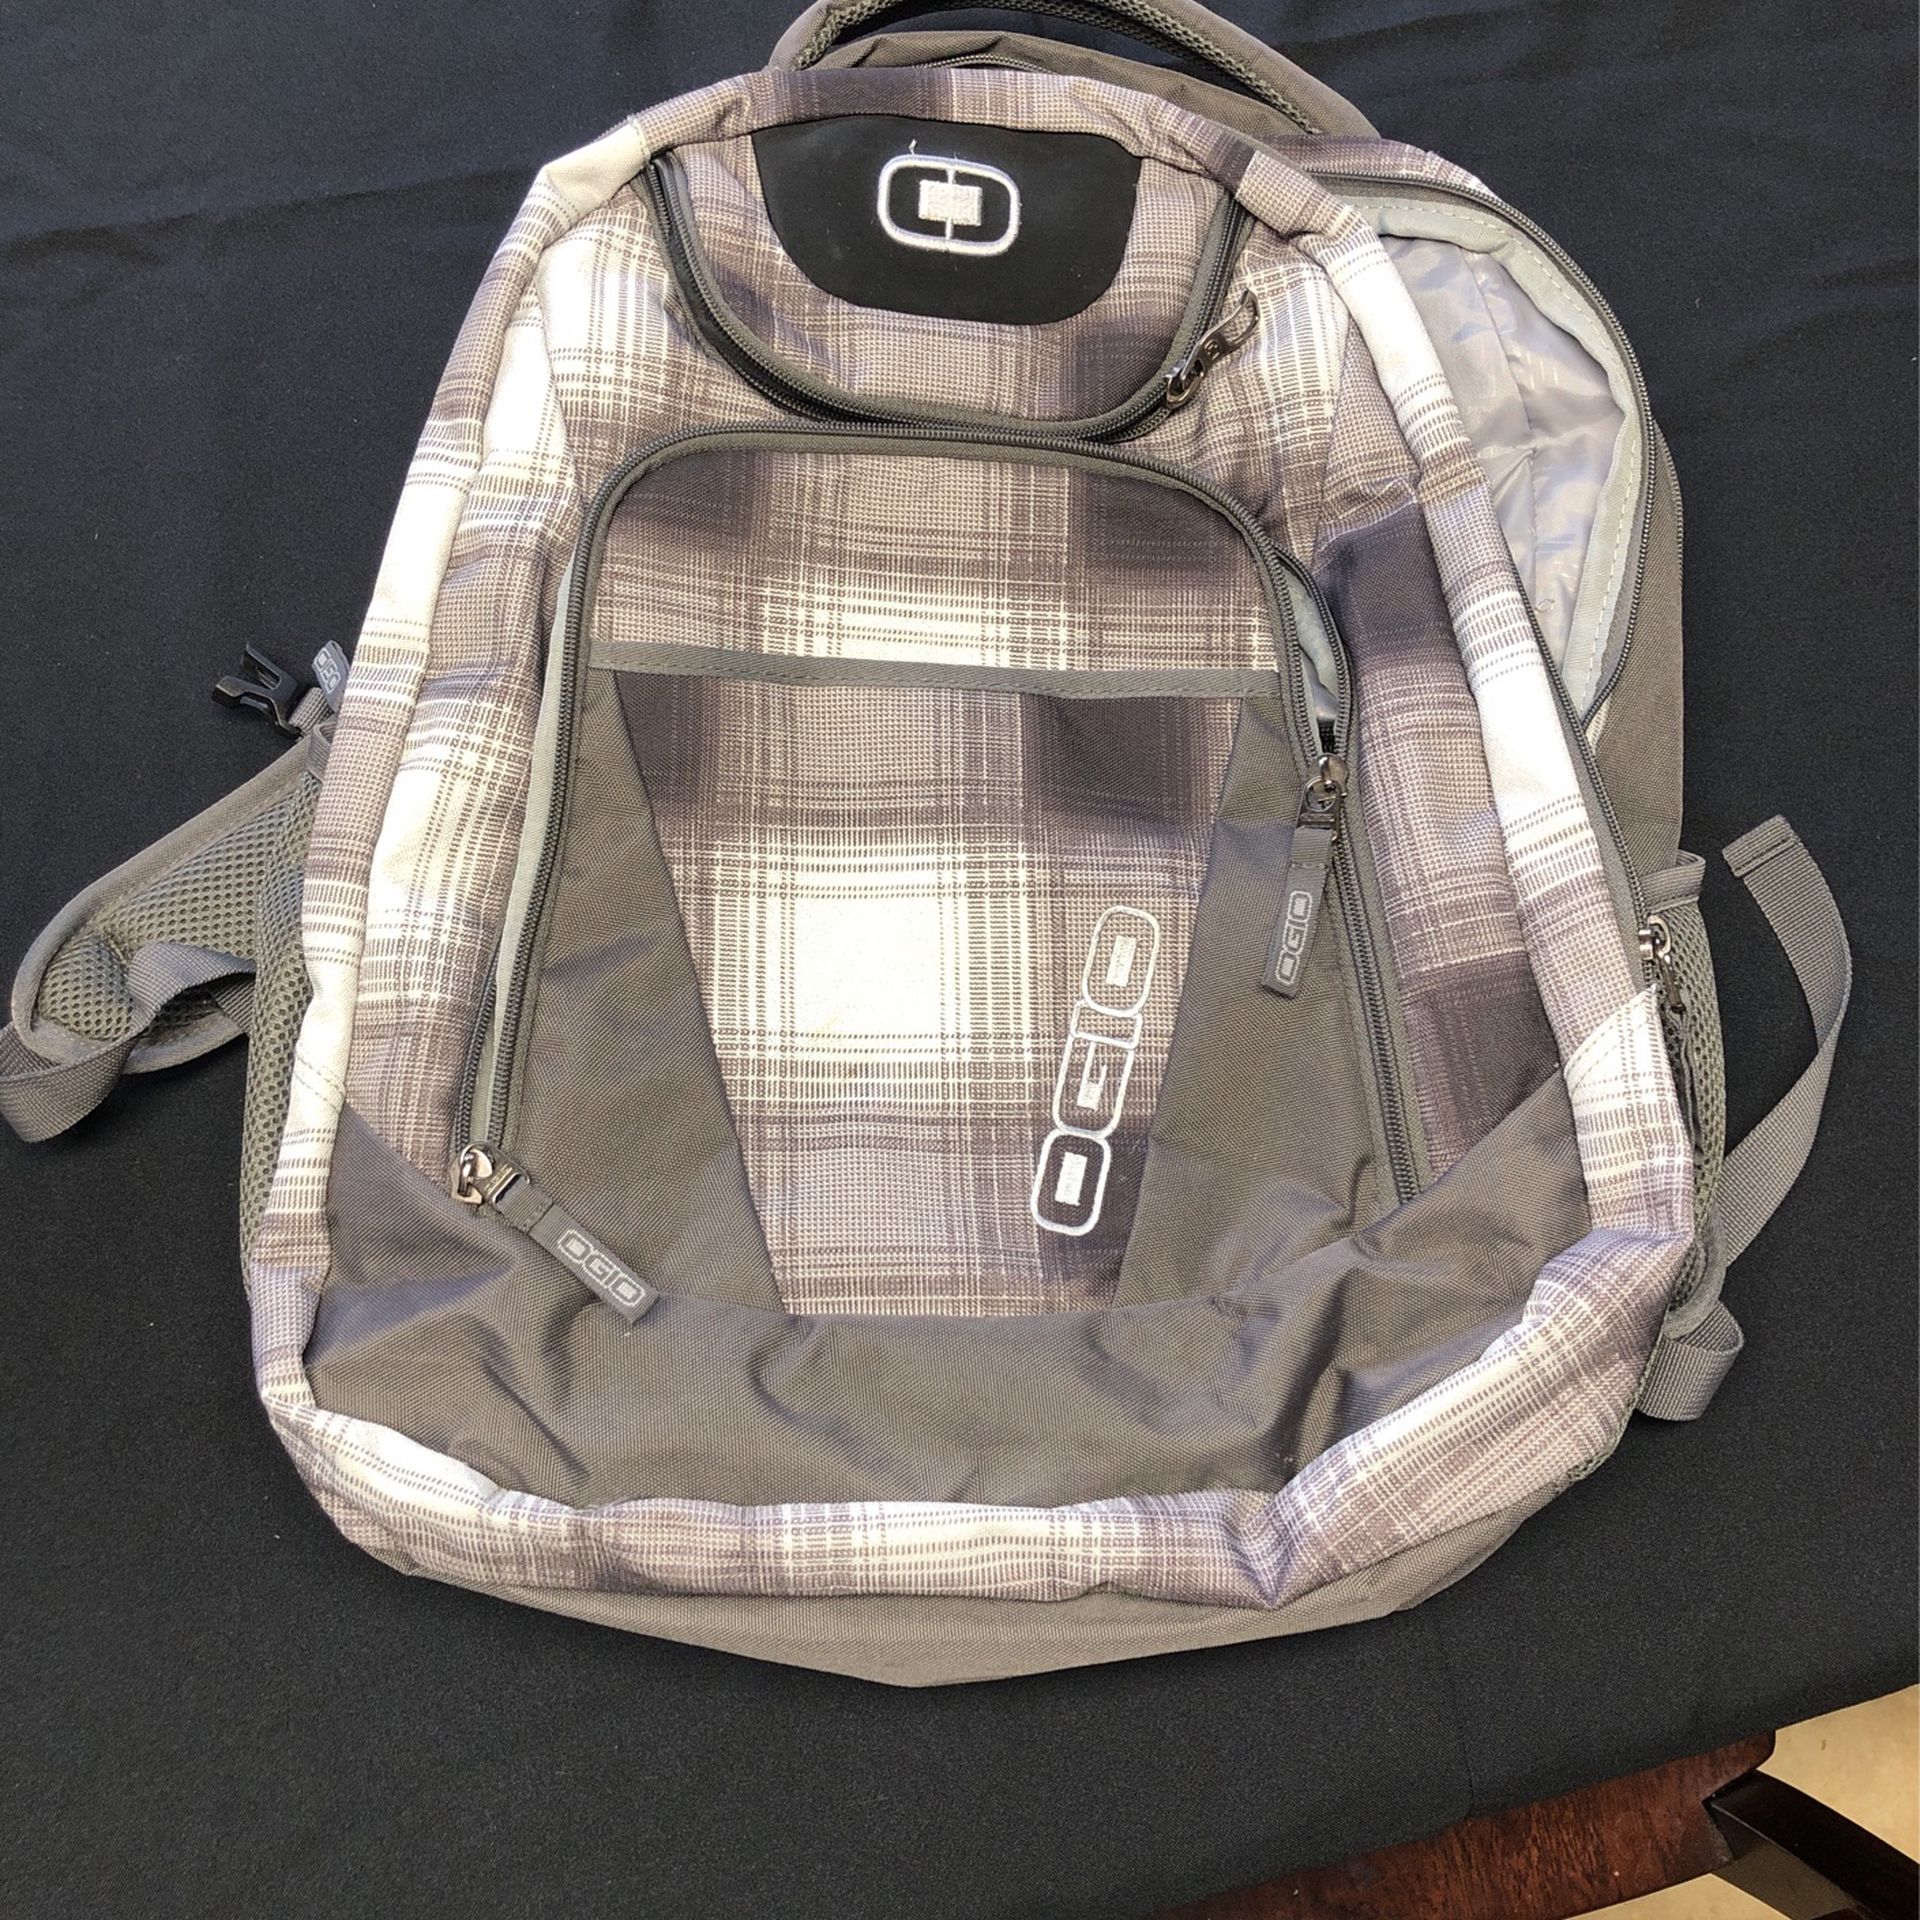 OGIO backpack